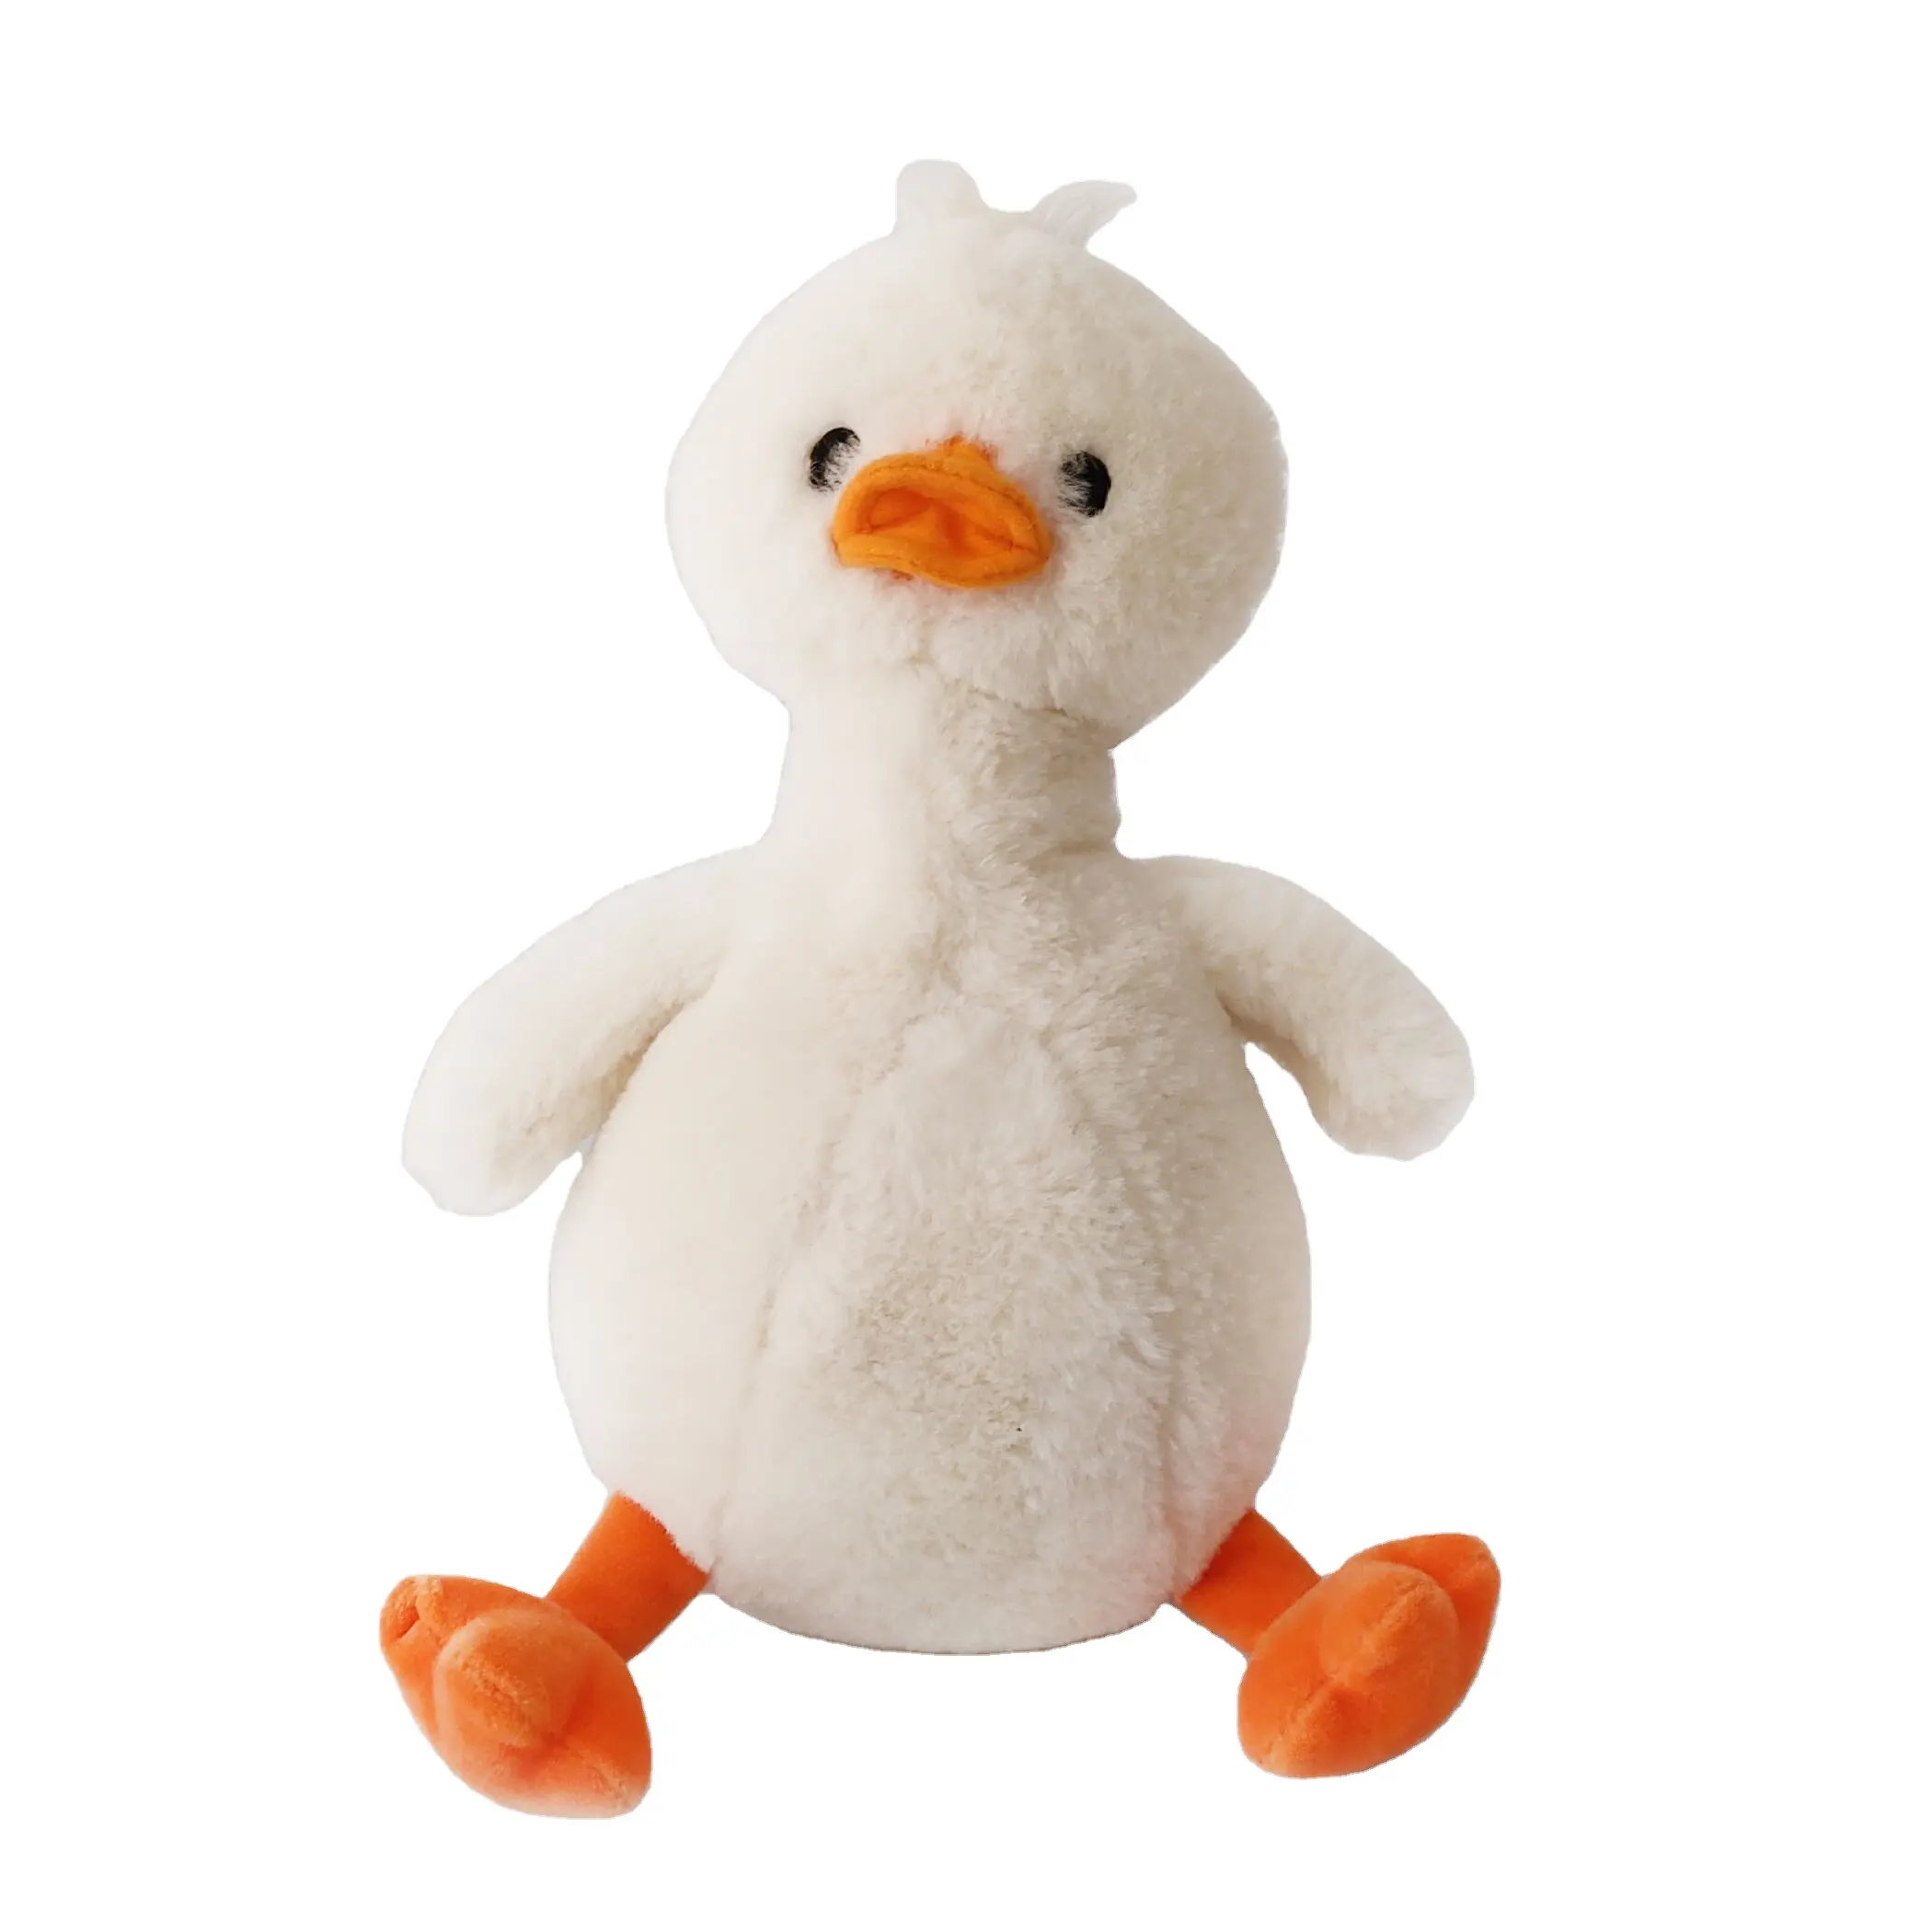 New Big Duck Plush Toy Soft Stuffed Kawaii Animal Yellow Duck Pillow Toy